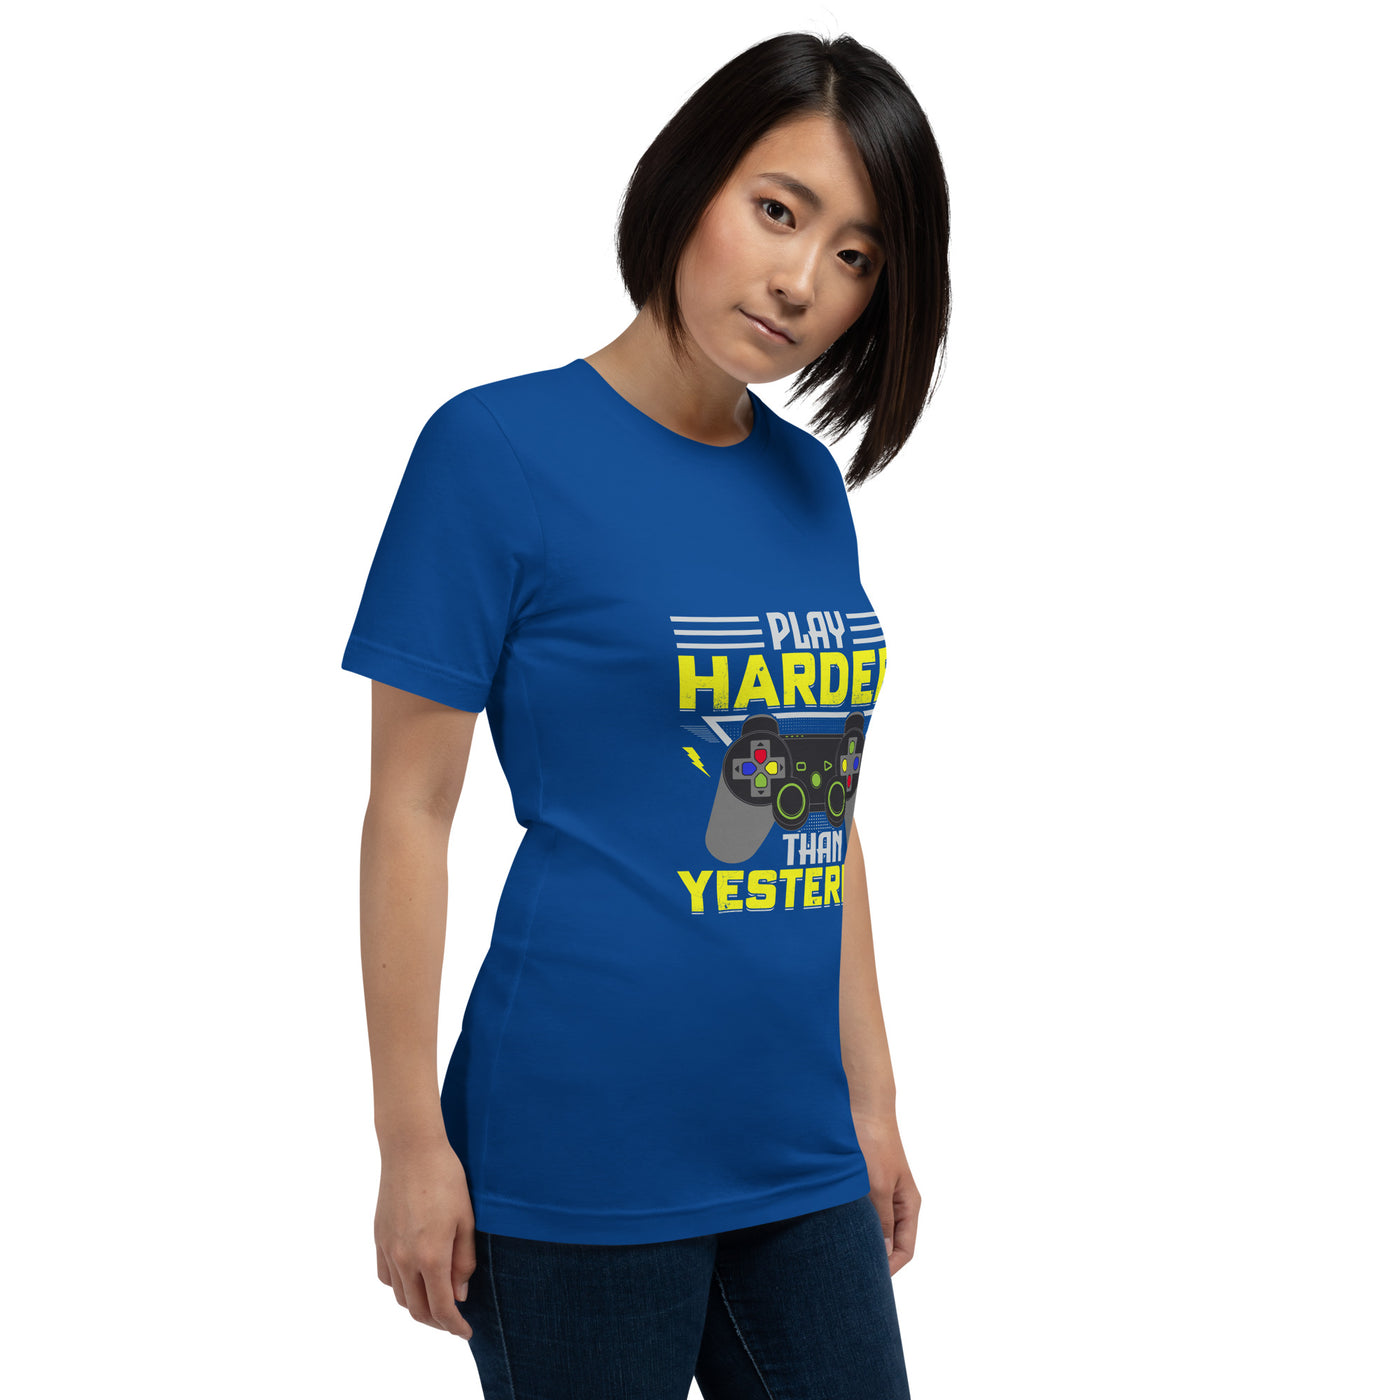 Play harder than Yesterday - Unisex t-shirt